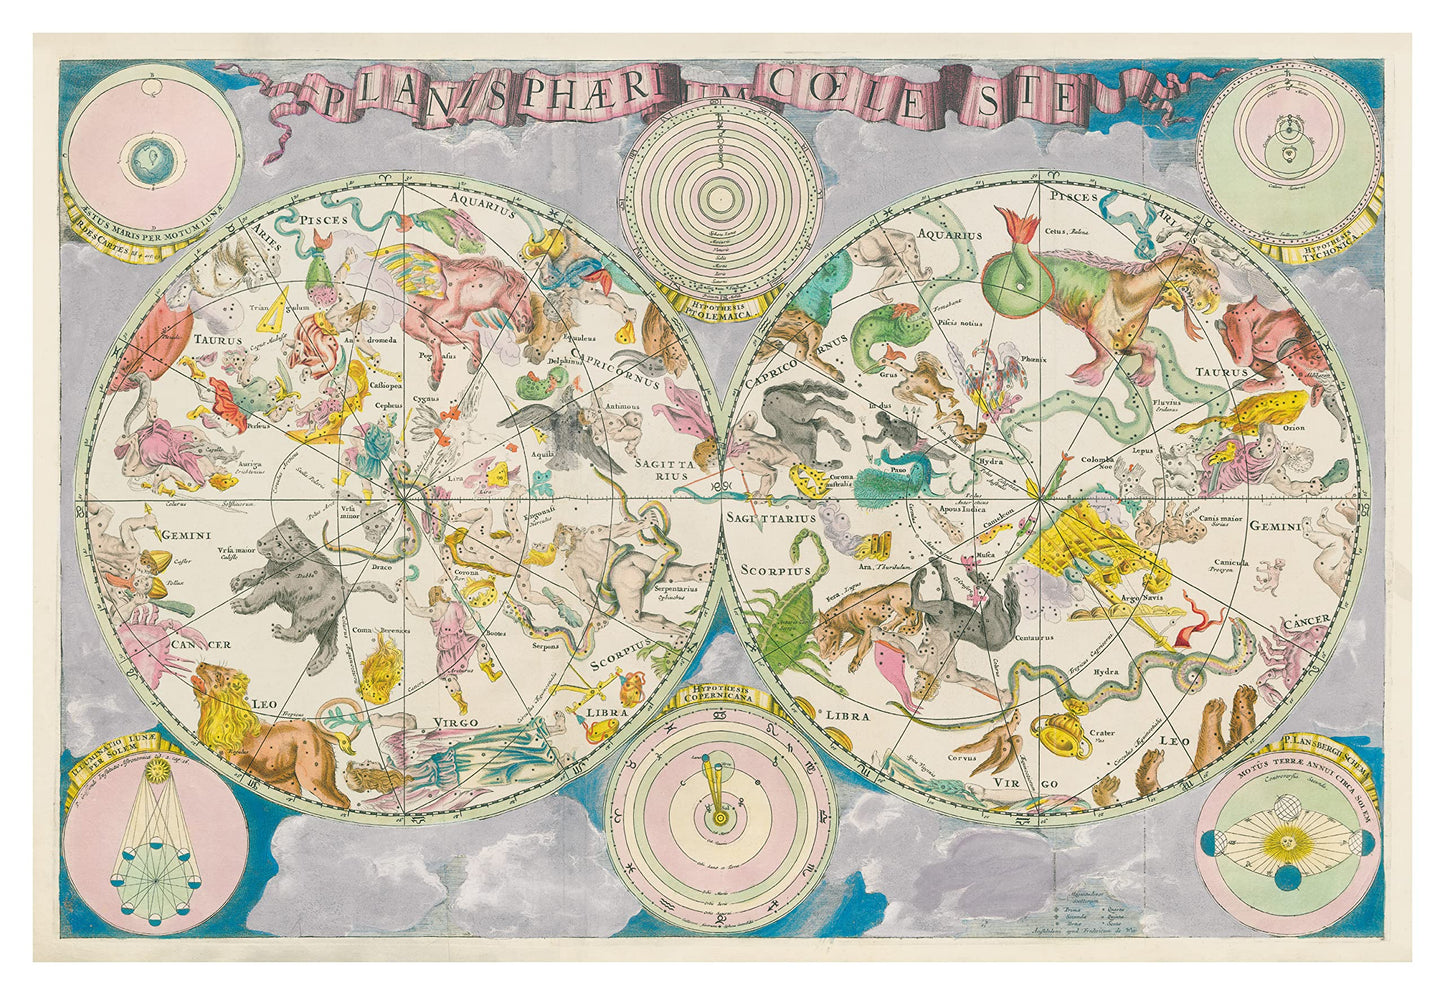 Phaenomena: Doppelmayr's Celestial Atlas